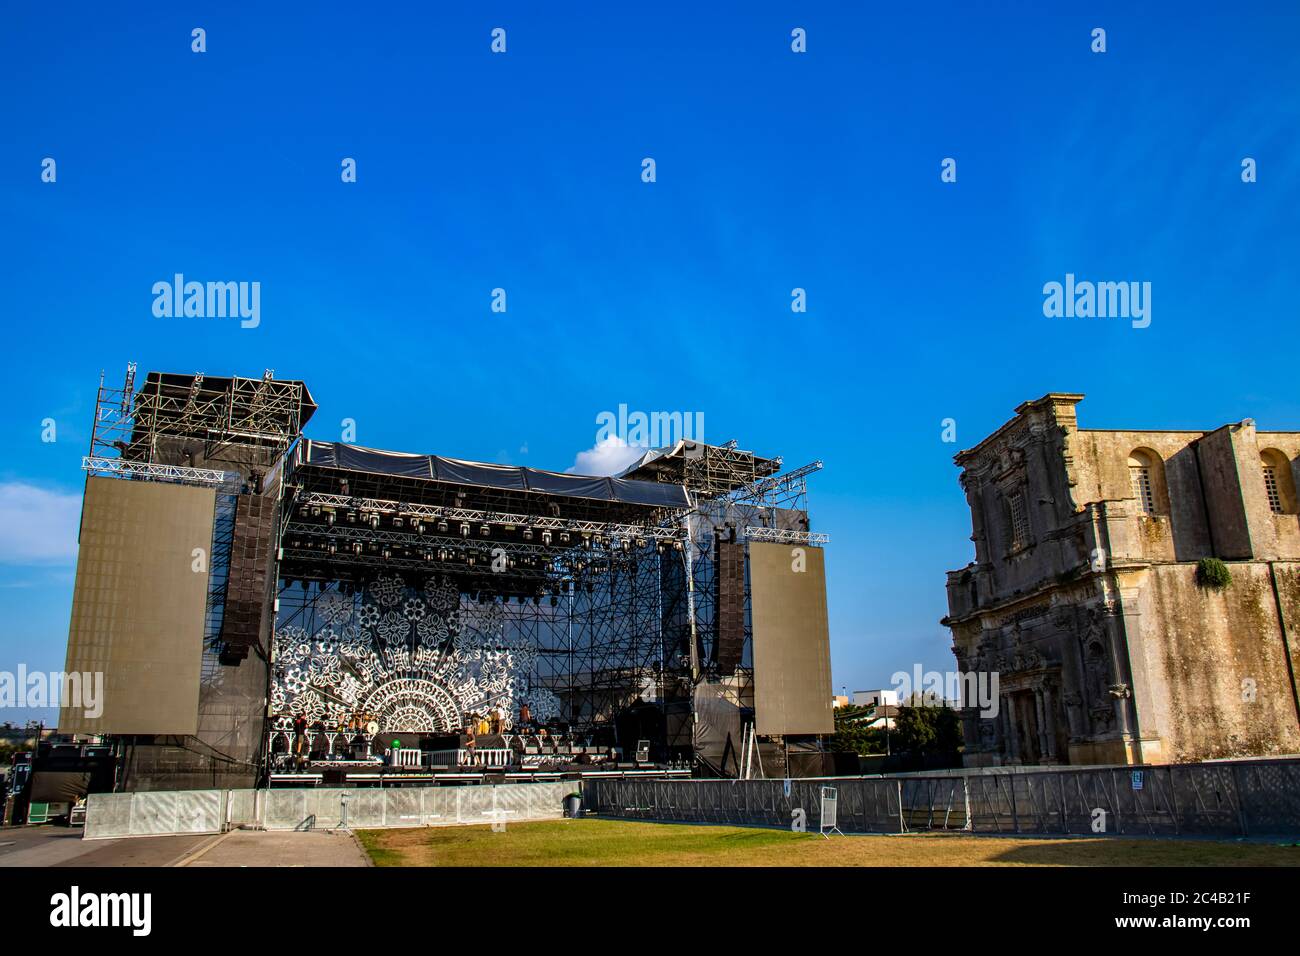 Melpignano, Lecce, Italien - Aufbau der Bühne für das Konzert "Notte della Taranta" in Melpignano, im Salento. Stockfoto